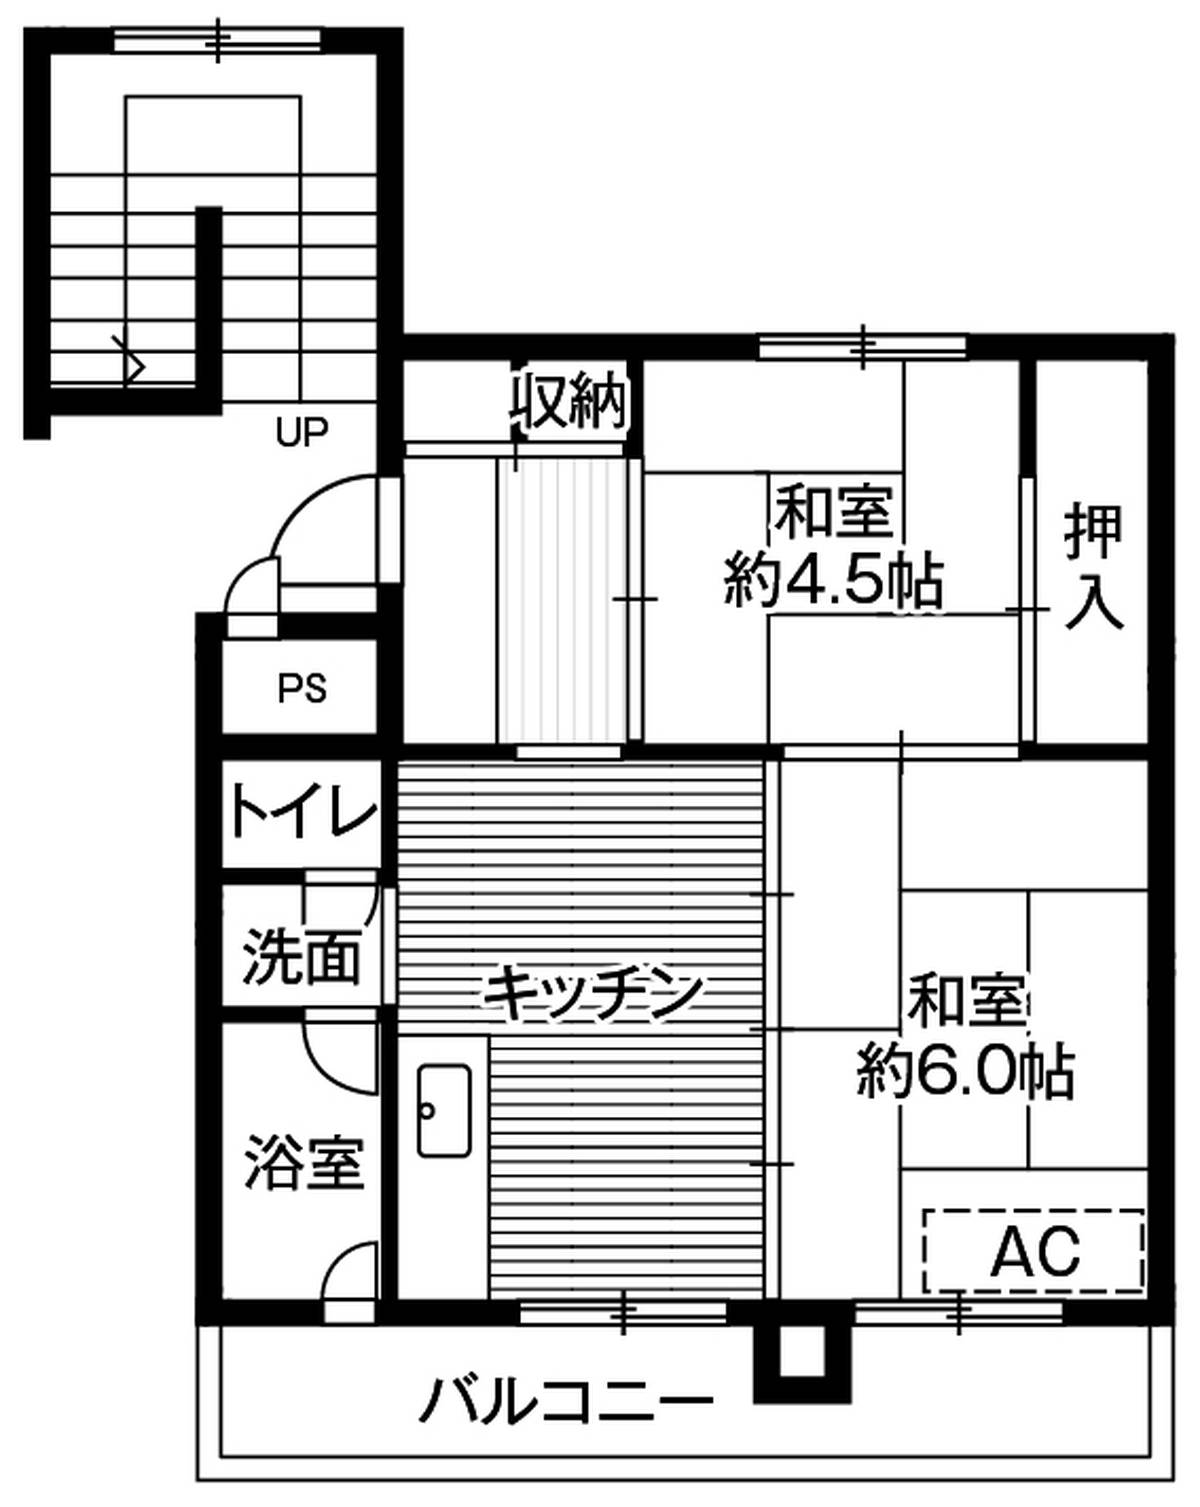 2DK floorplan of Village House Rumoi in Rumoi-shi